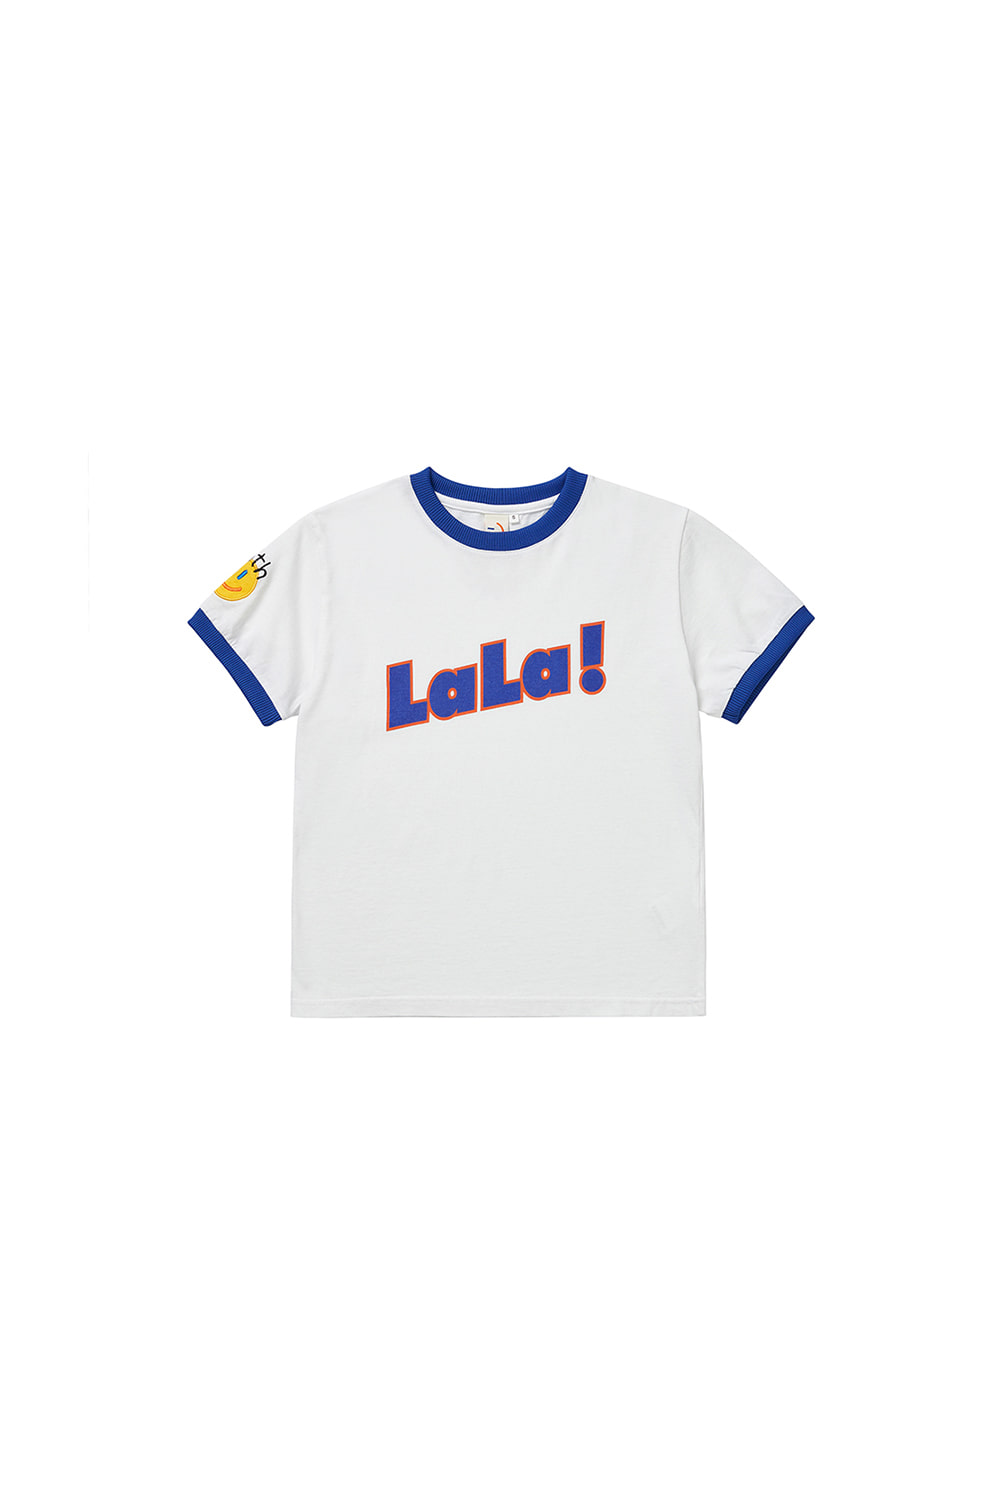 LaLa Twotone T-shirt [Blue]